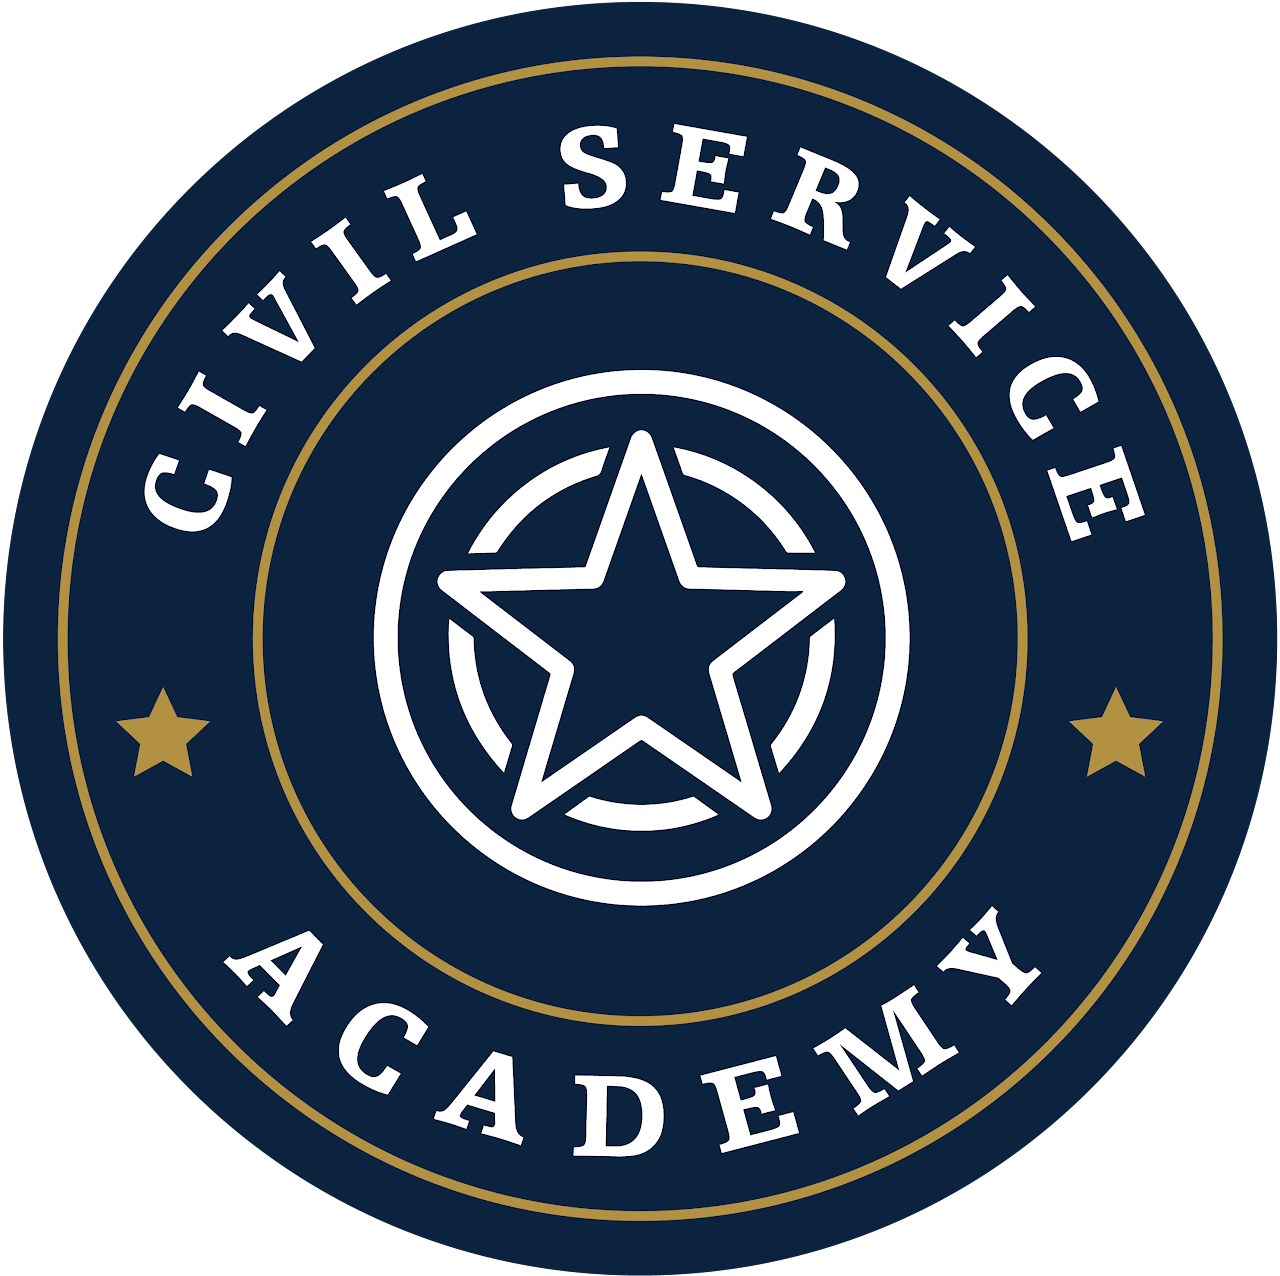 Civil Service Academy